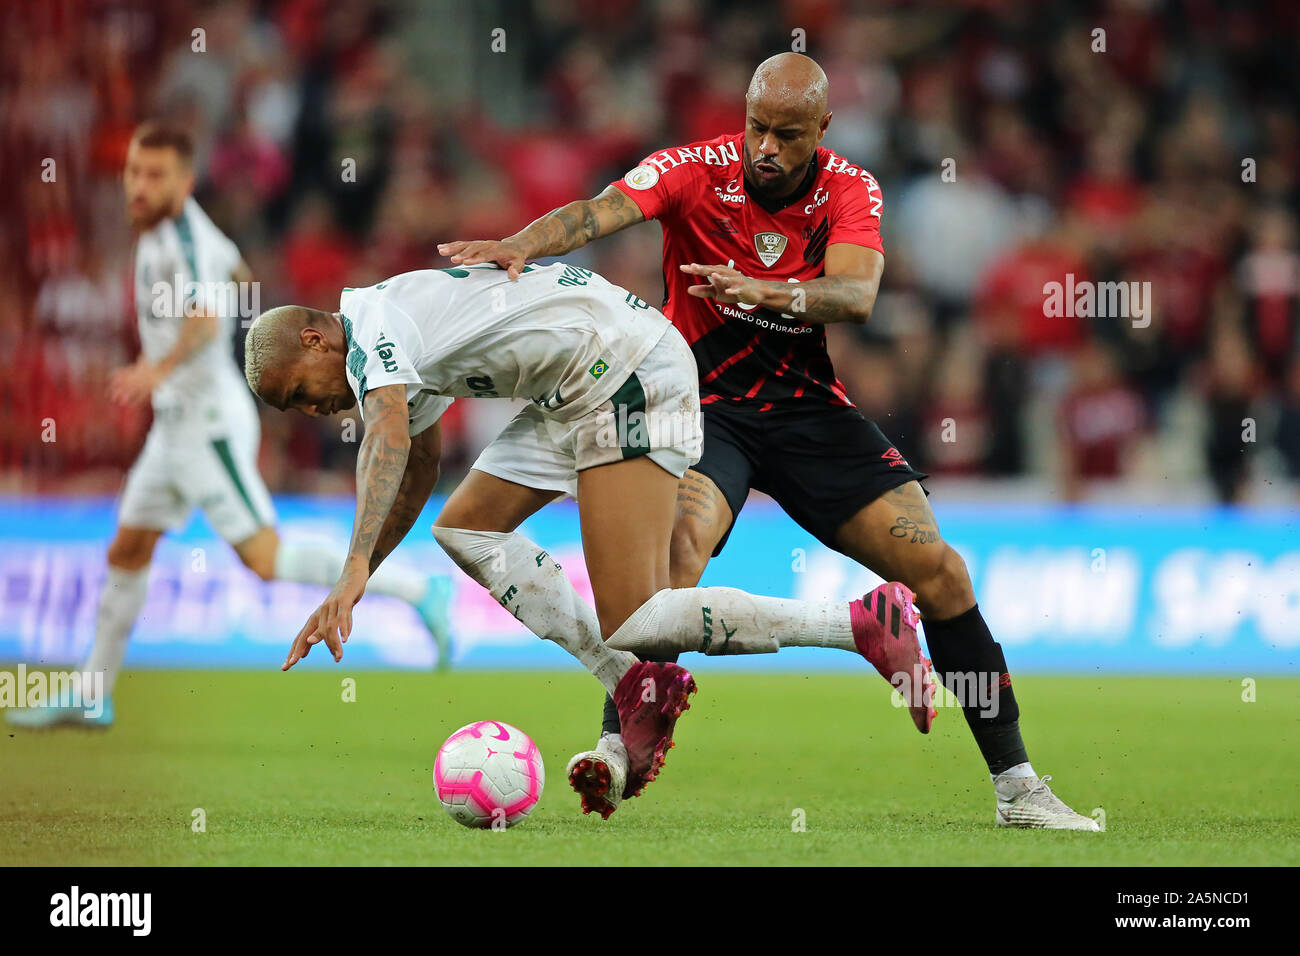 Palmeiras Deyverson R Vies Ball Against Editorial Stock Photo - Stock Image